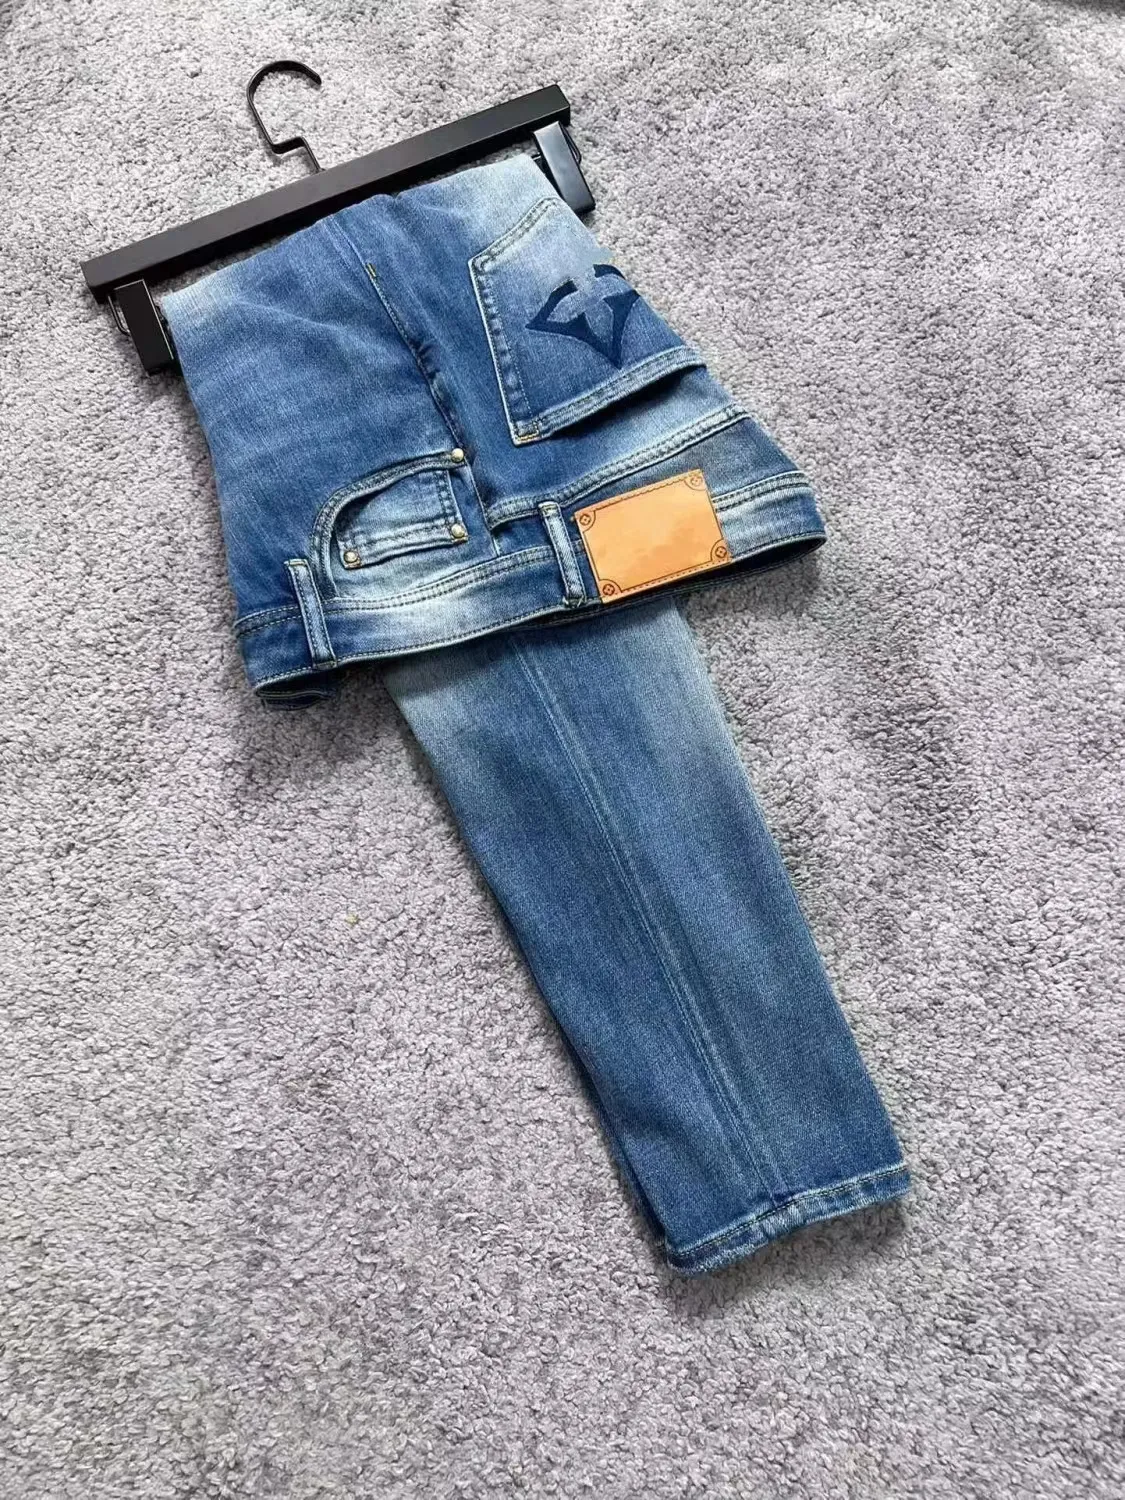 Catalog Name:*Men's Fancy Denim Solid Jeans Vol 13*Fabric: DenimPattern